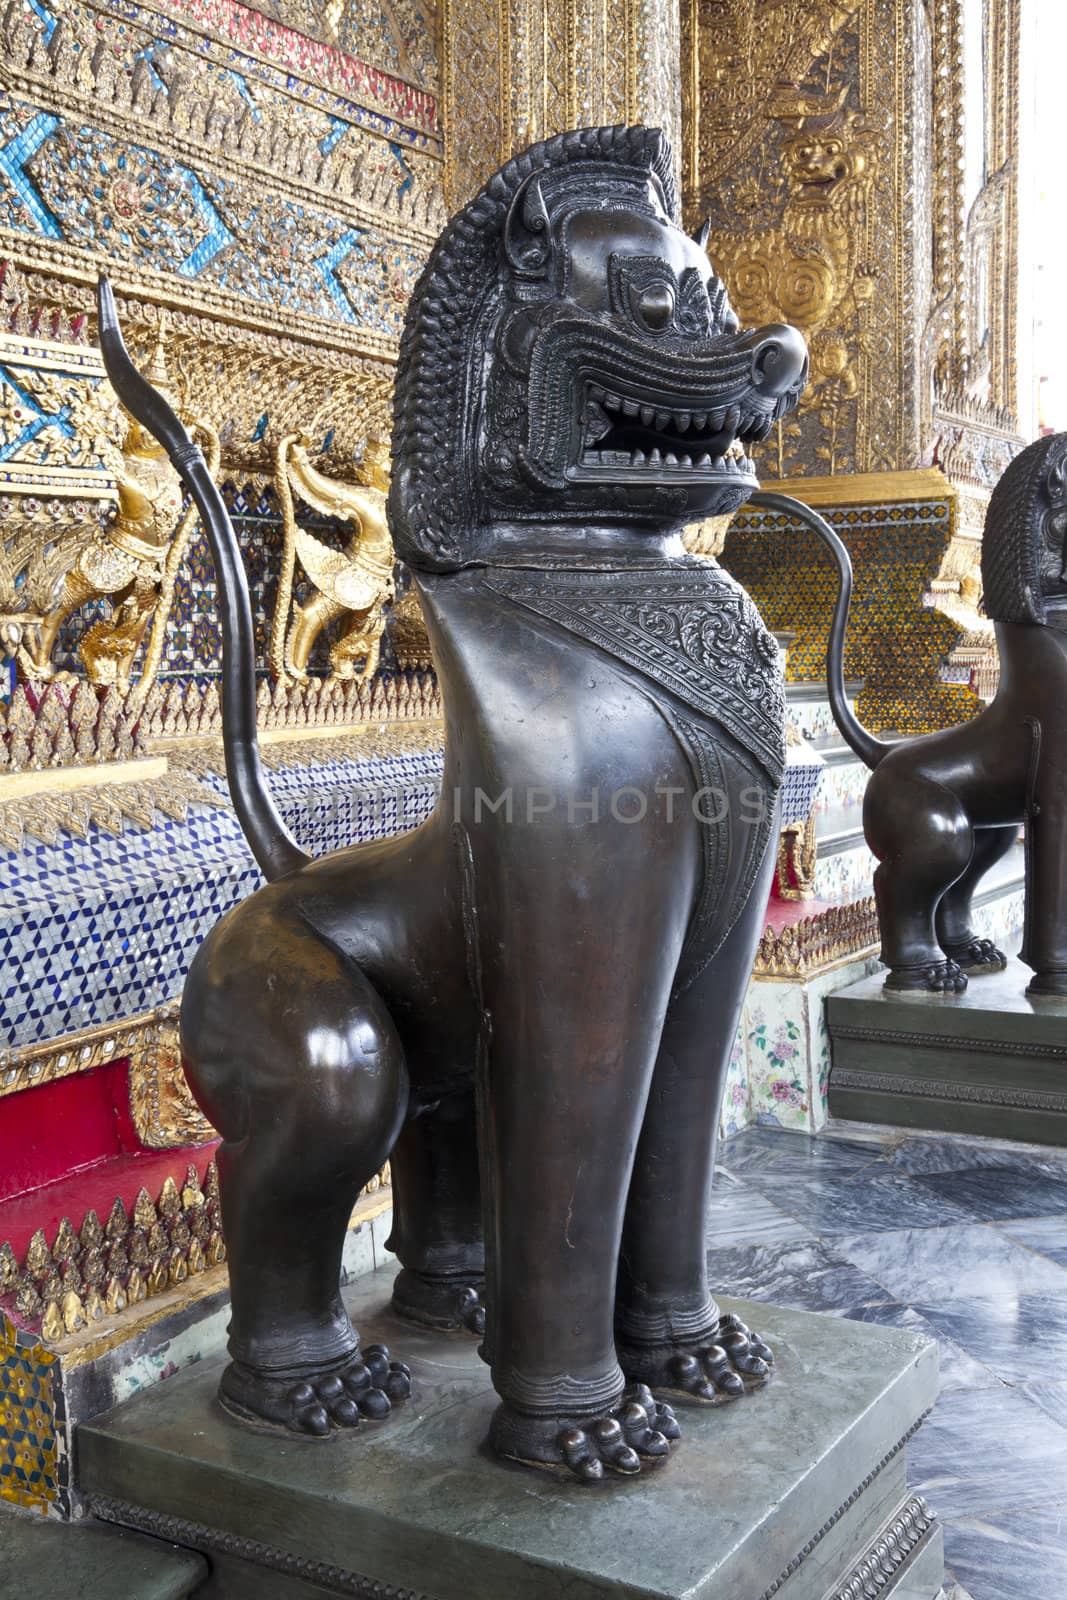 the statue in wat phra kaew, bangkok, thailand